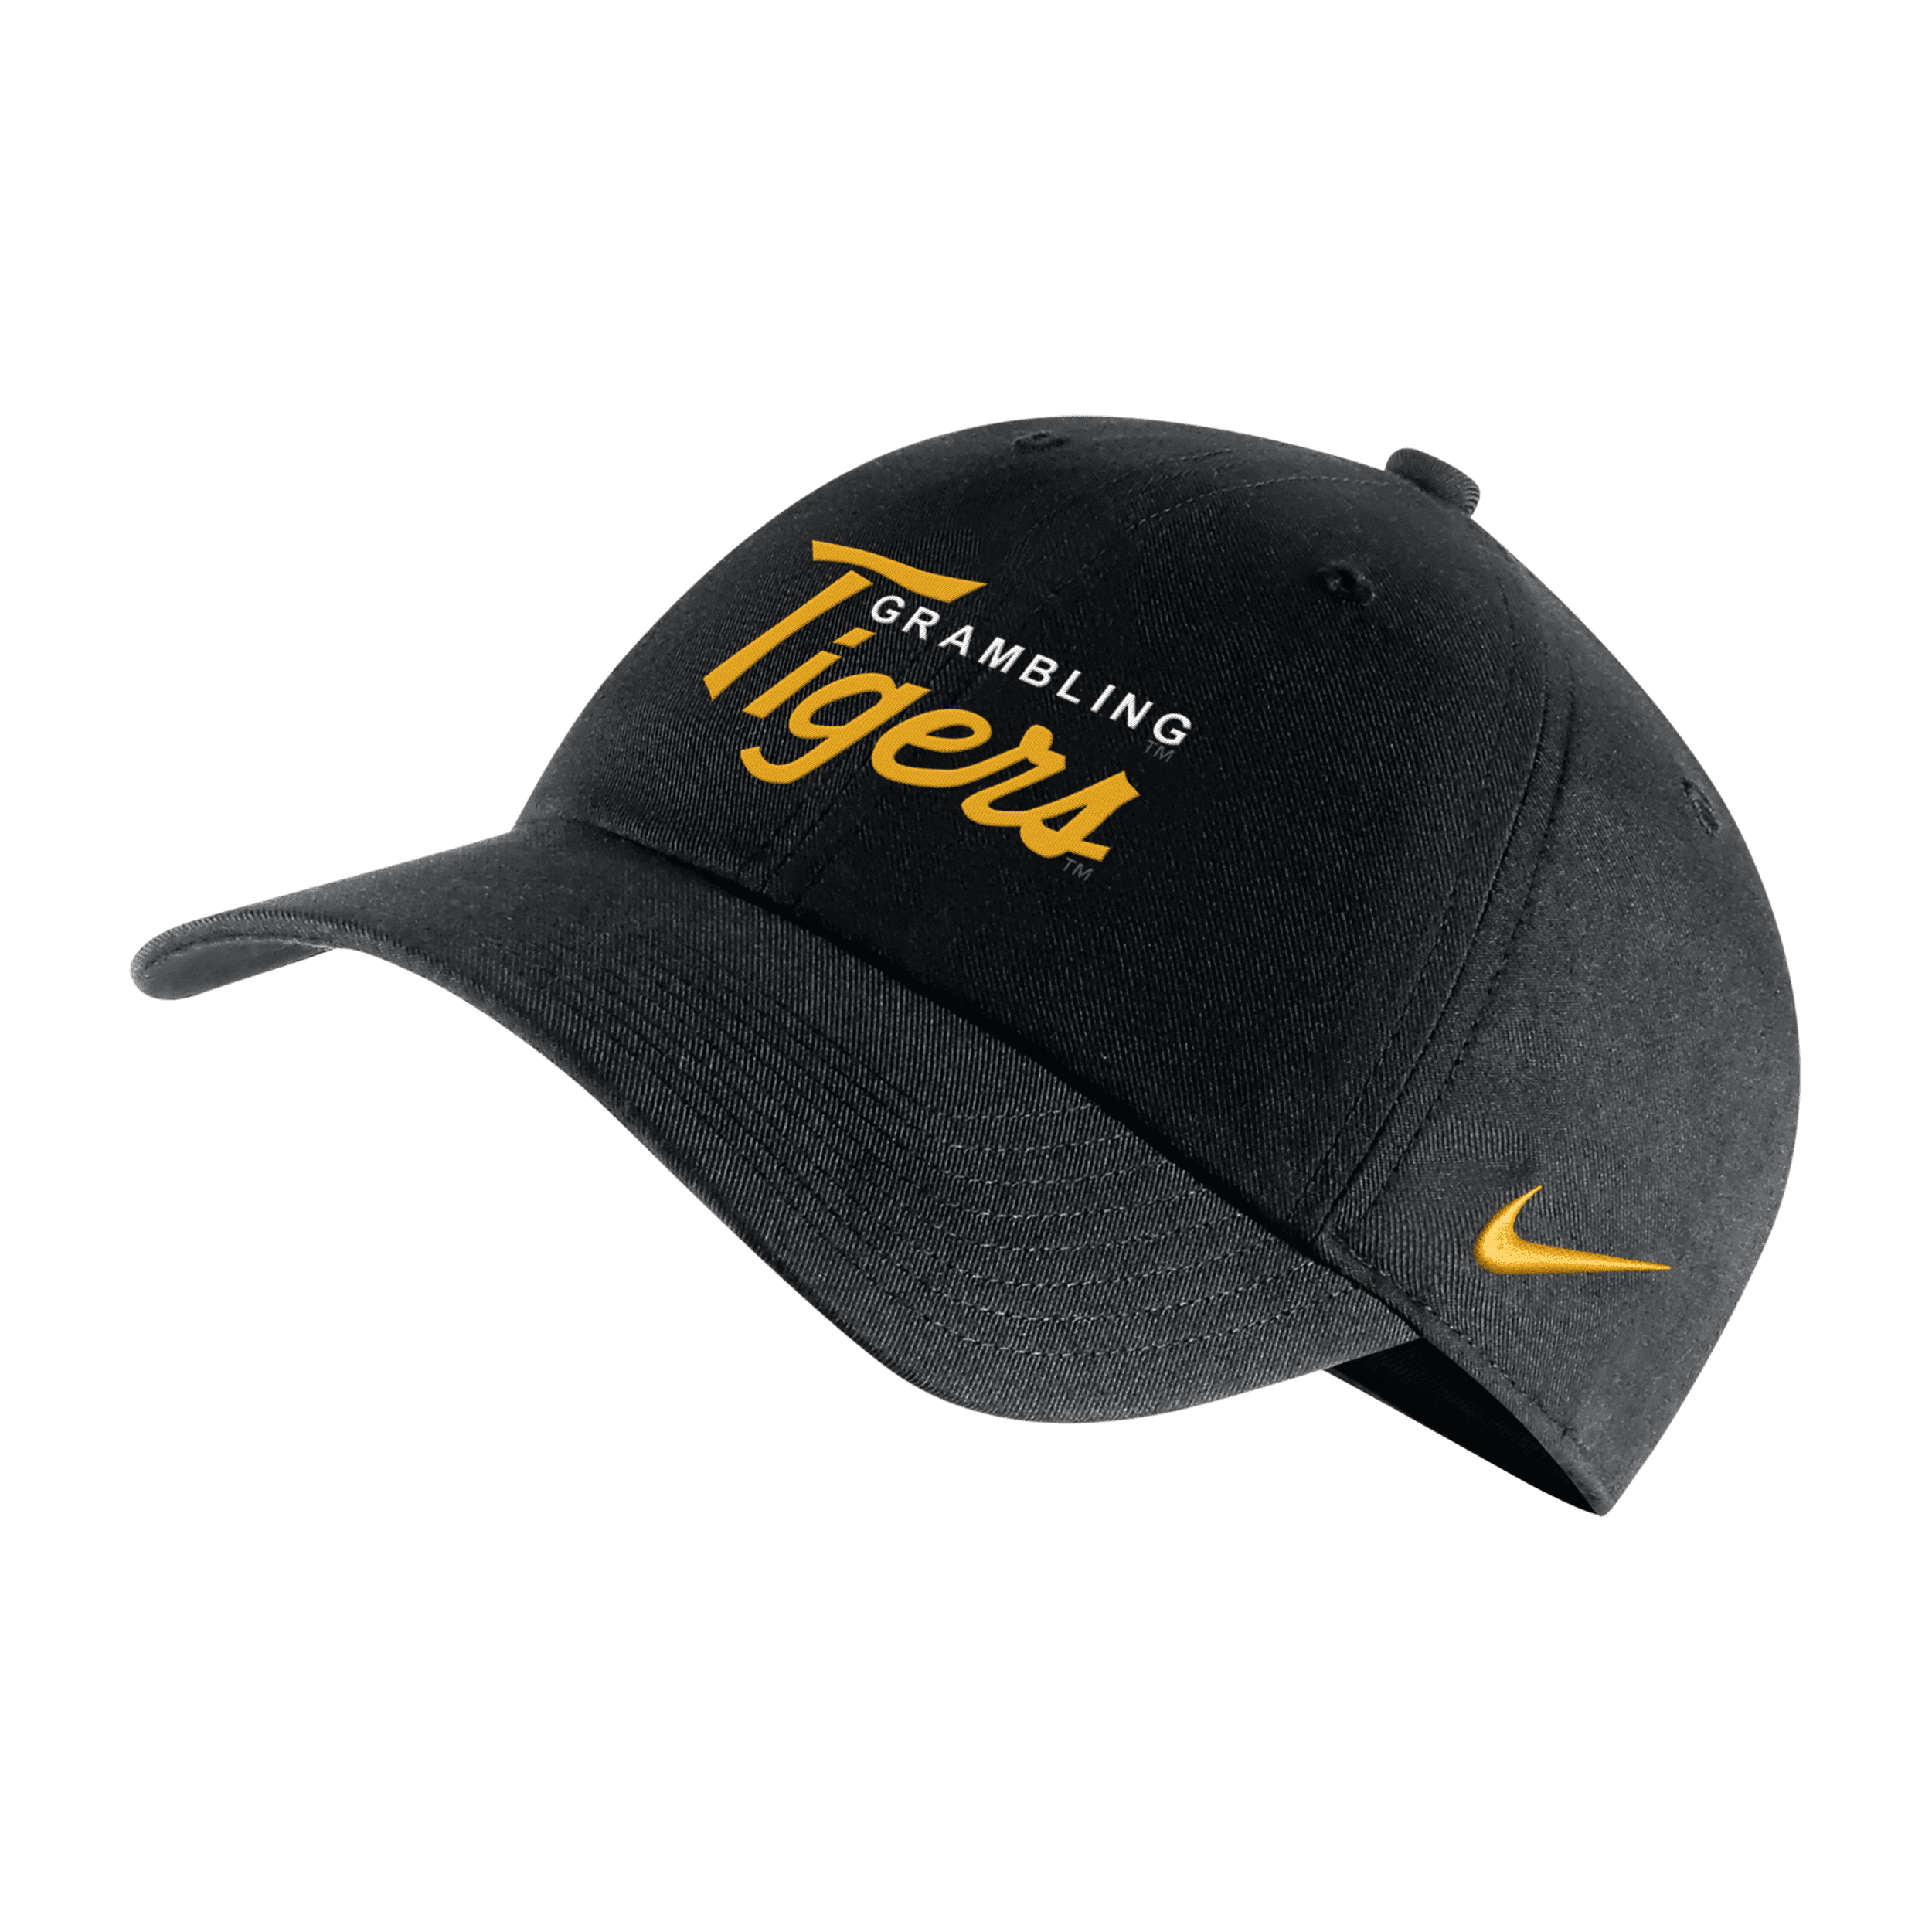 Nike Men's College Campus 365 (grambling State) Adjustable Hat In Black